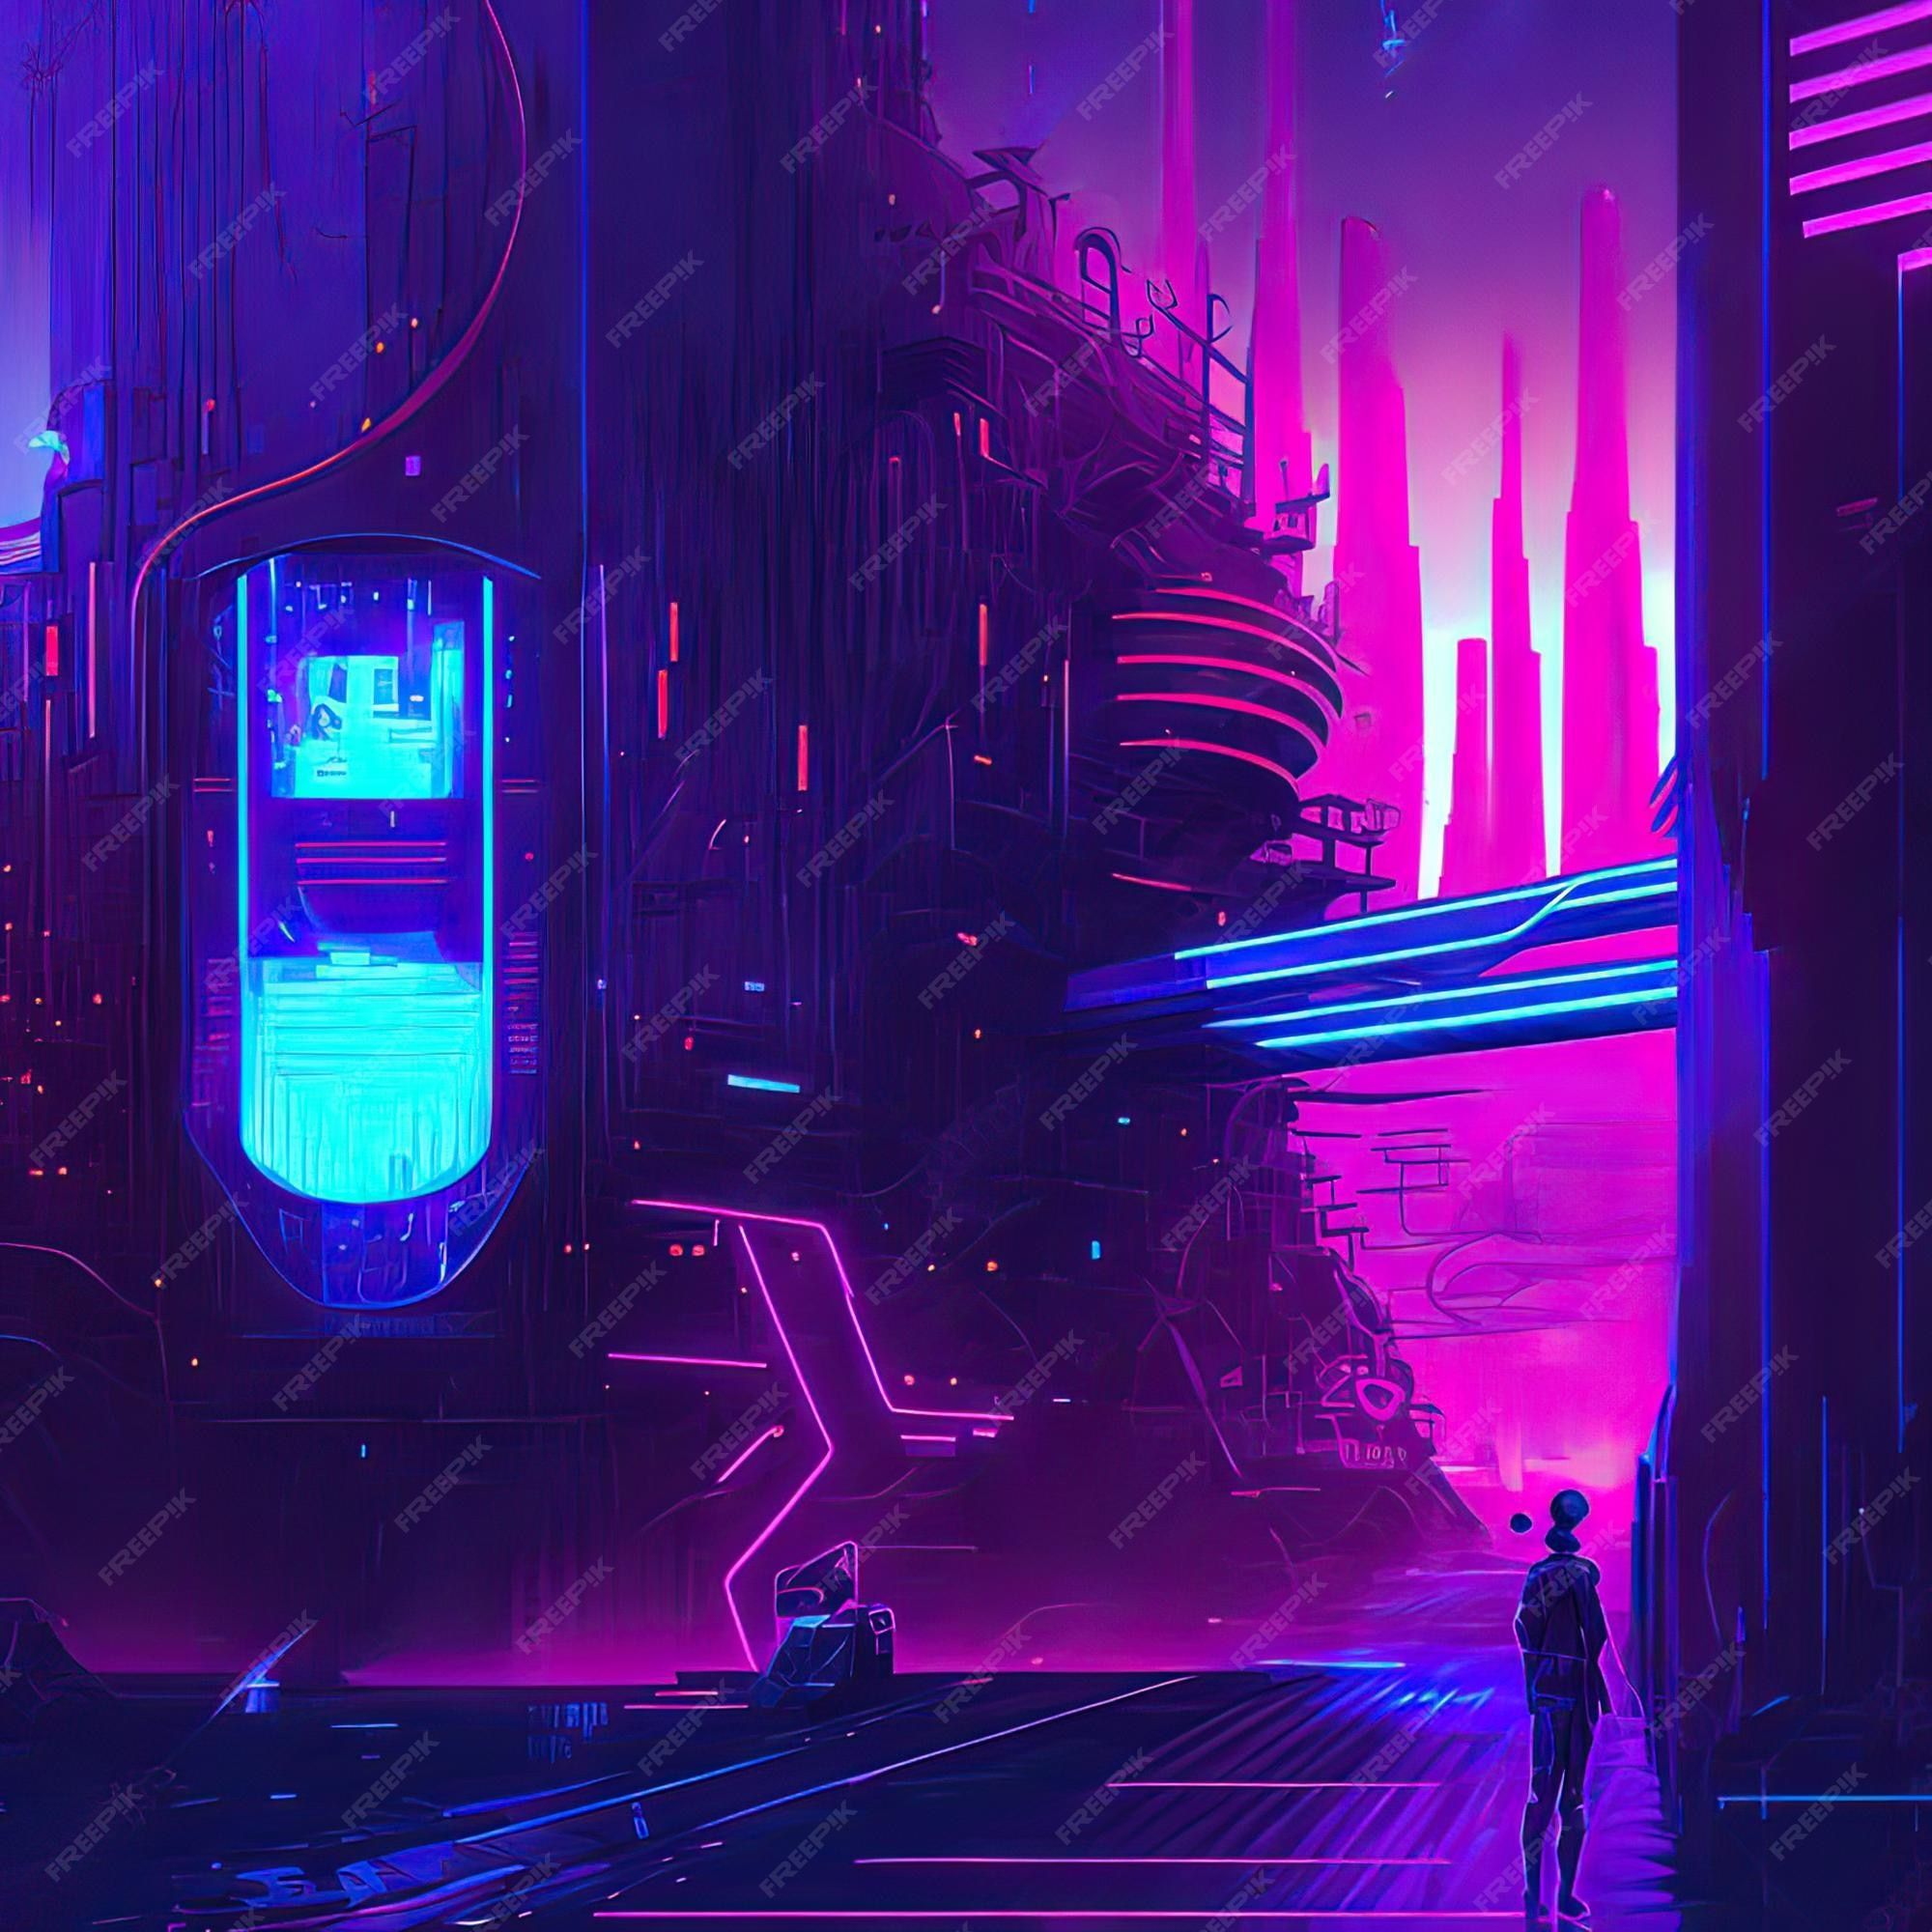 Premium Photo. Cyberpunk industrial abstract future wallpaper futuristic concept pink evening urban landscape 3D illustration